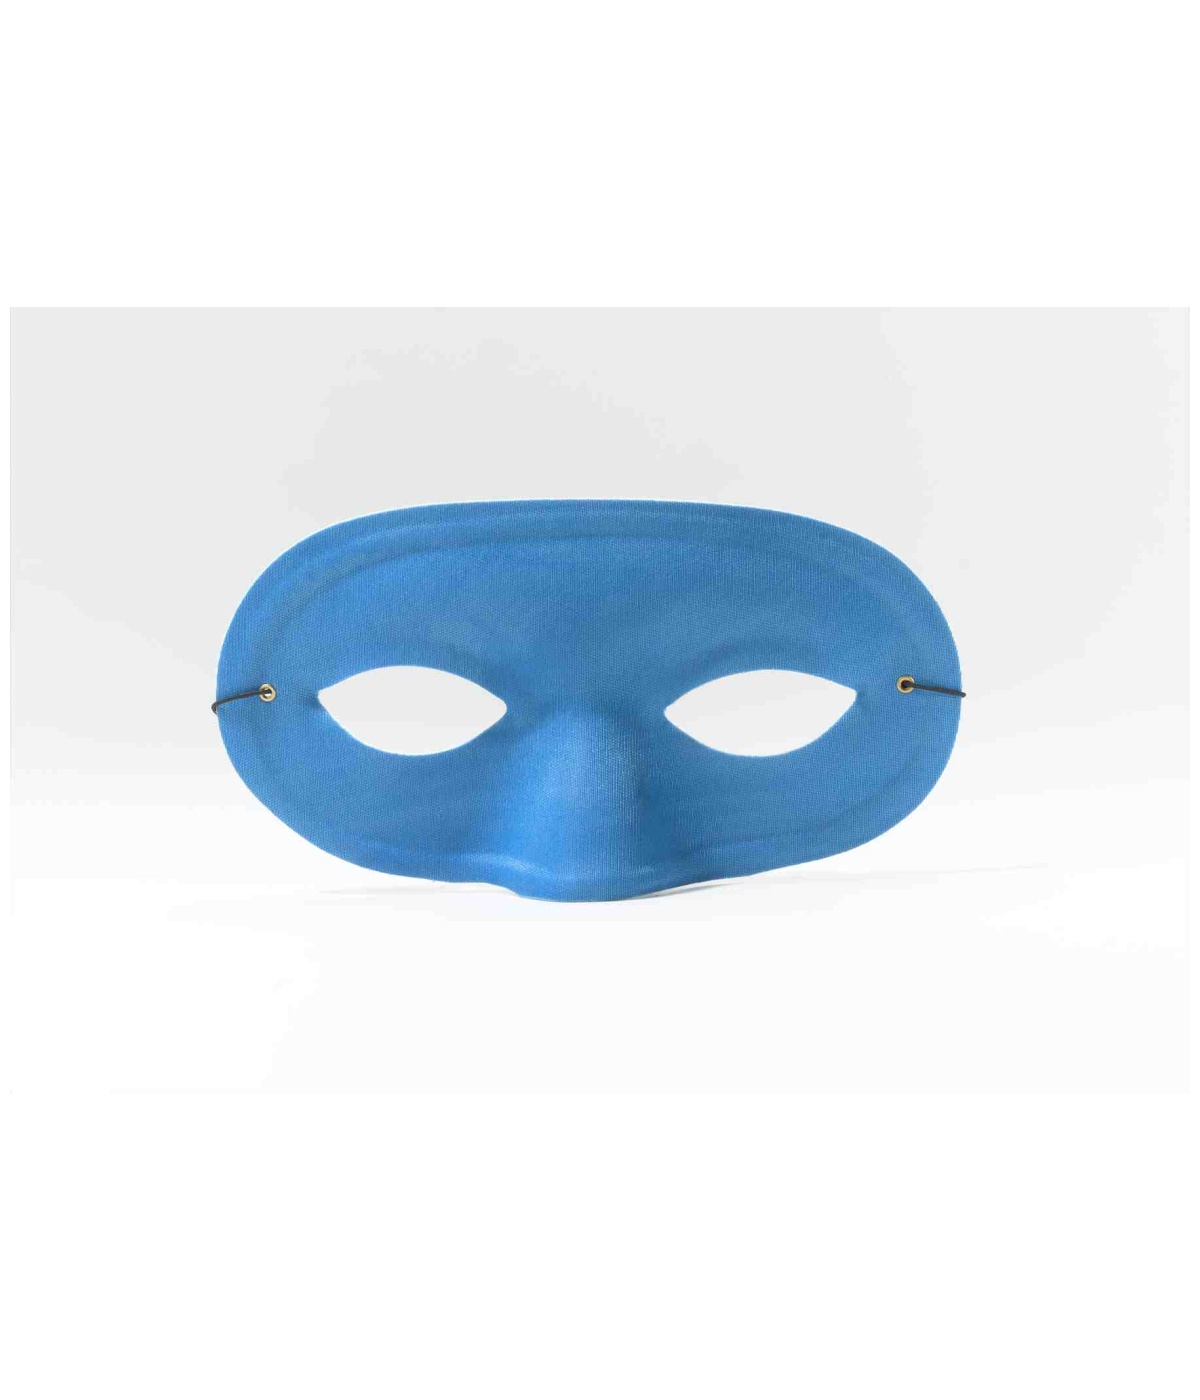  Blue Domino Male Mask